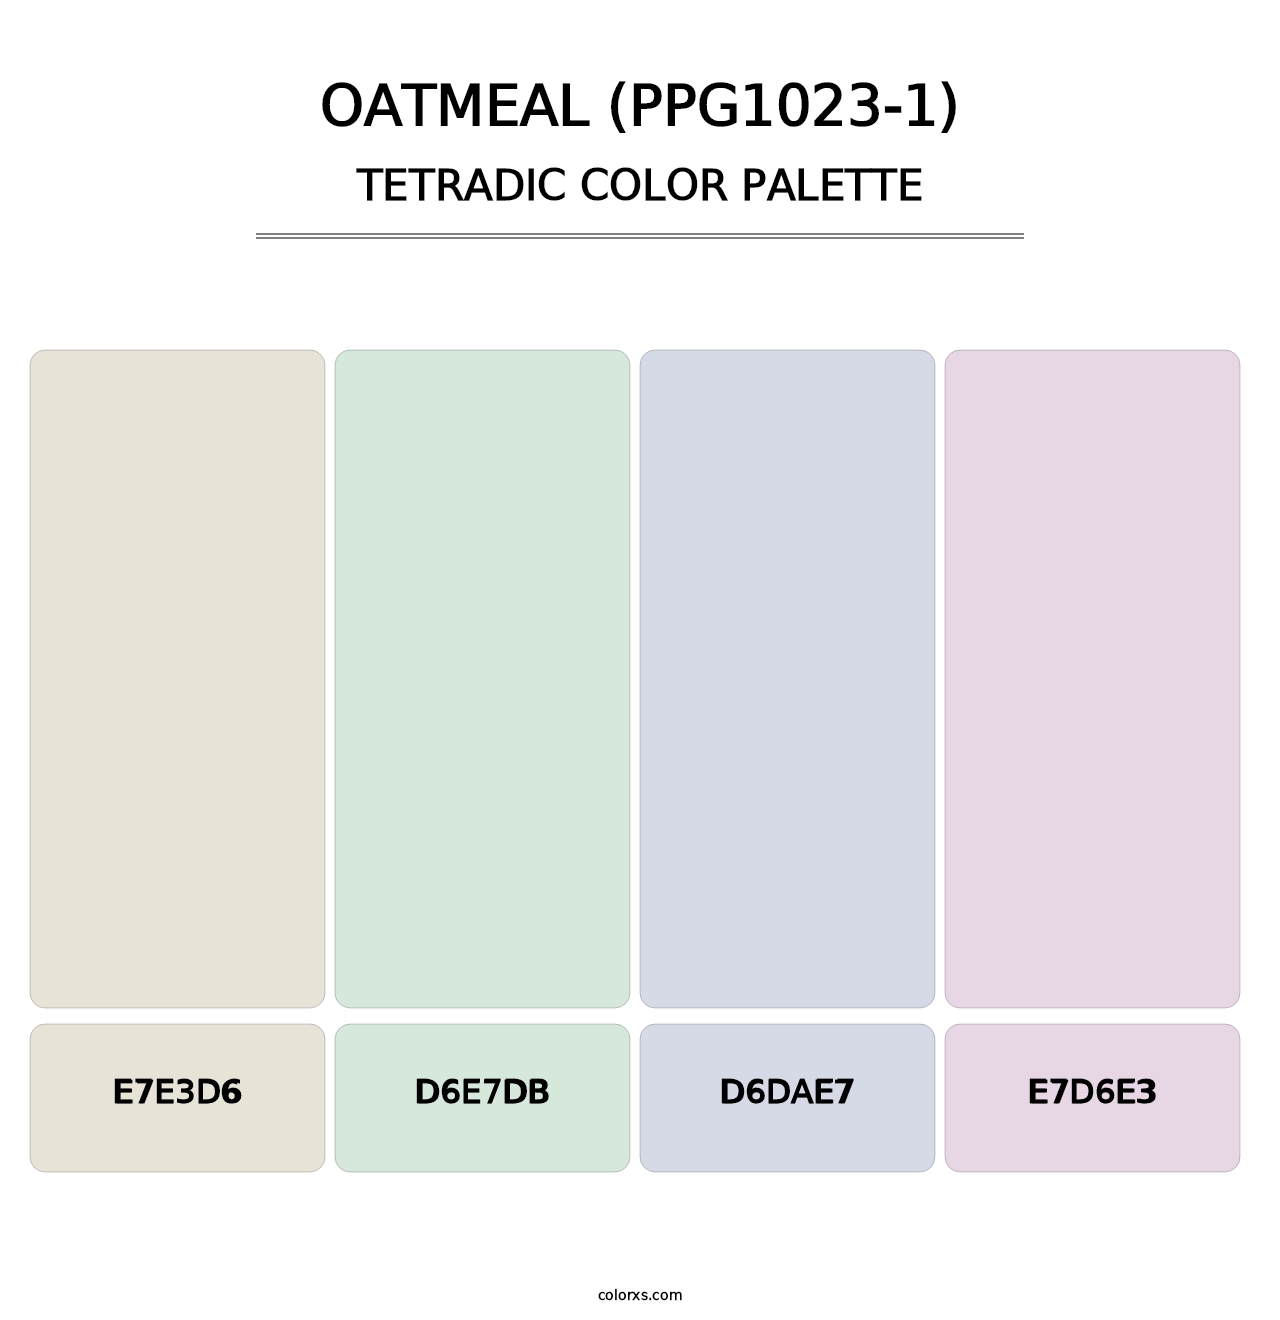 Oatmeal (PPG1023-1) - Tetradic Color Palette